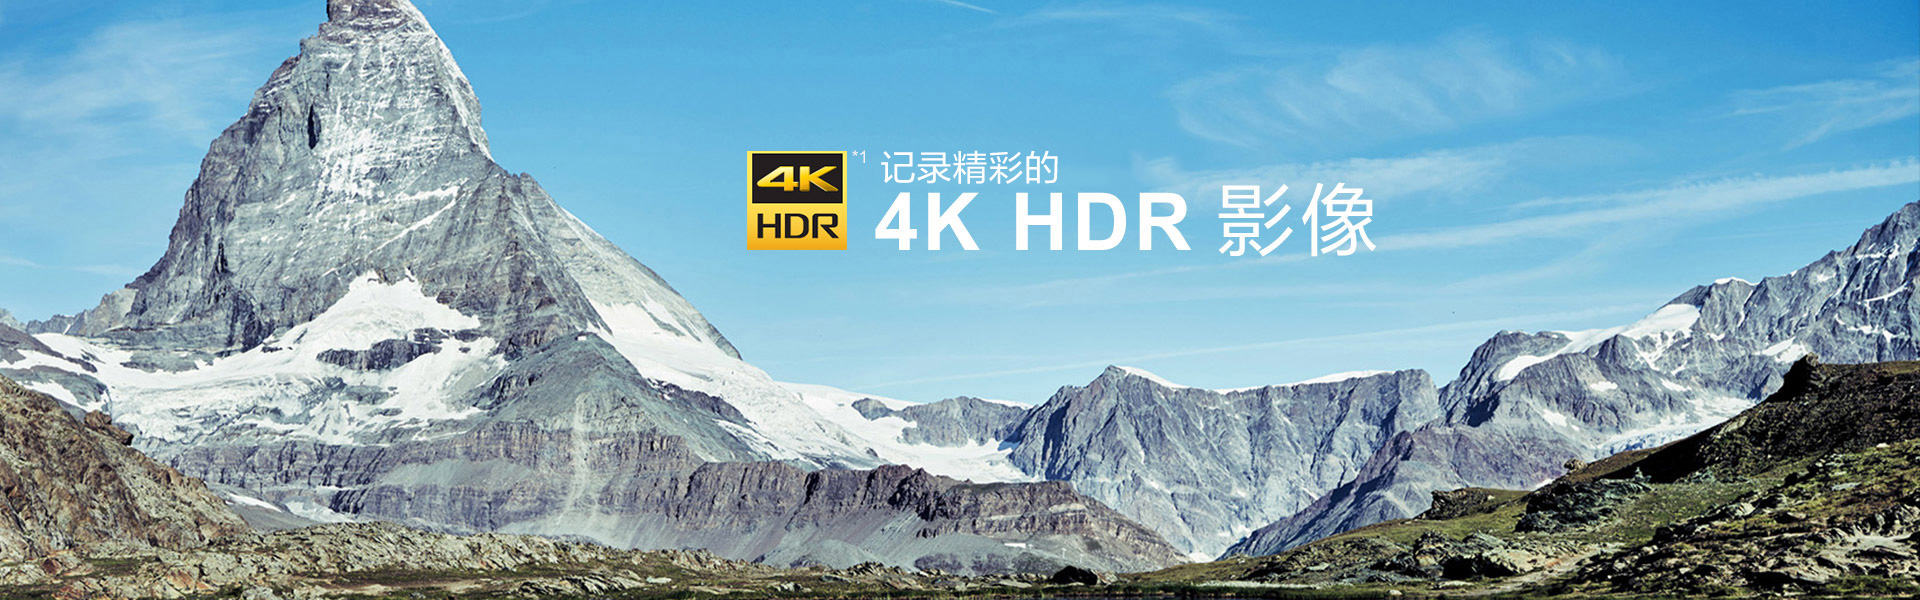 记录精彩4K HDR影像